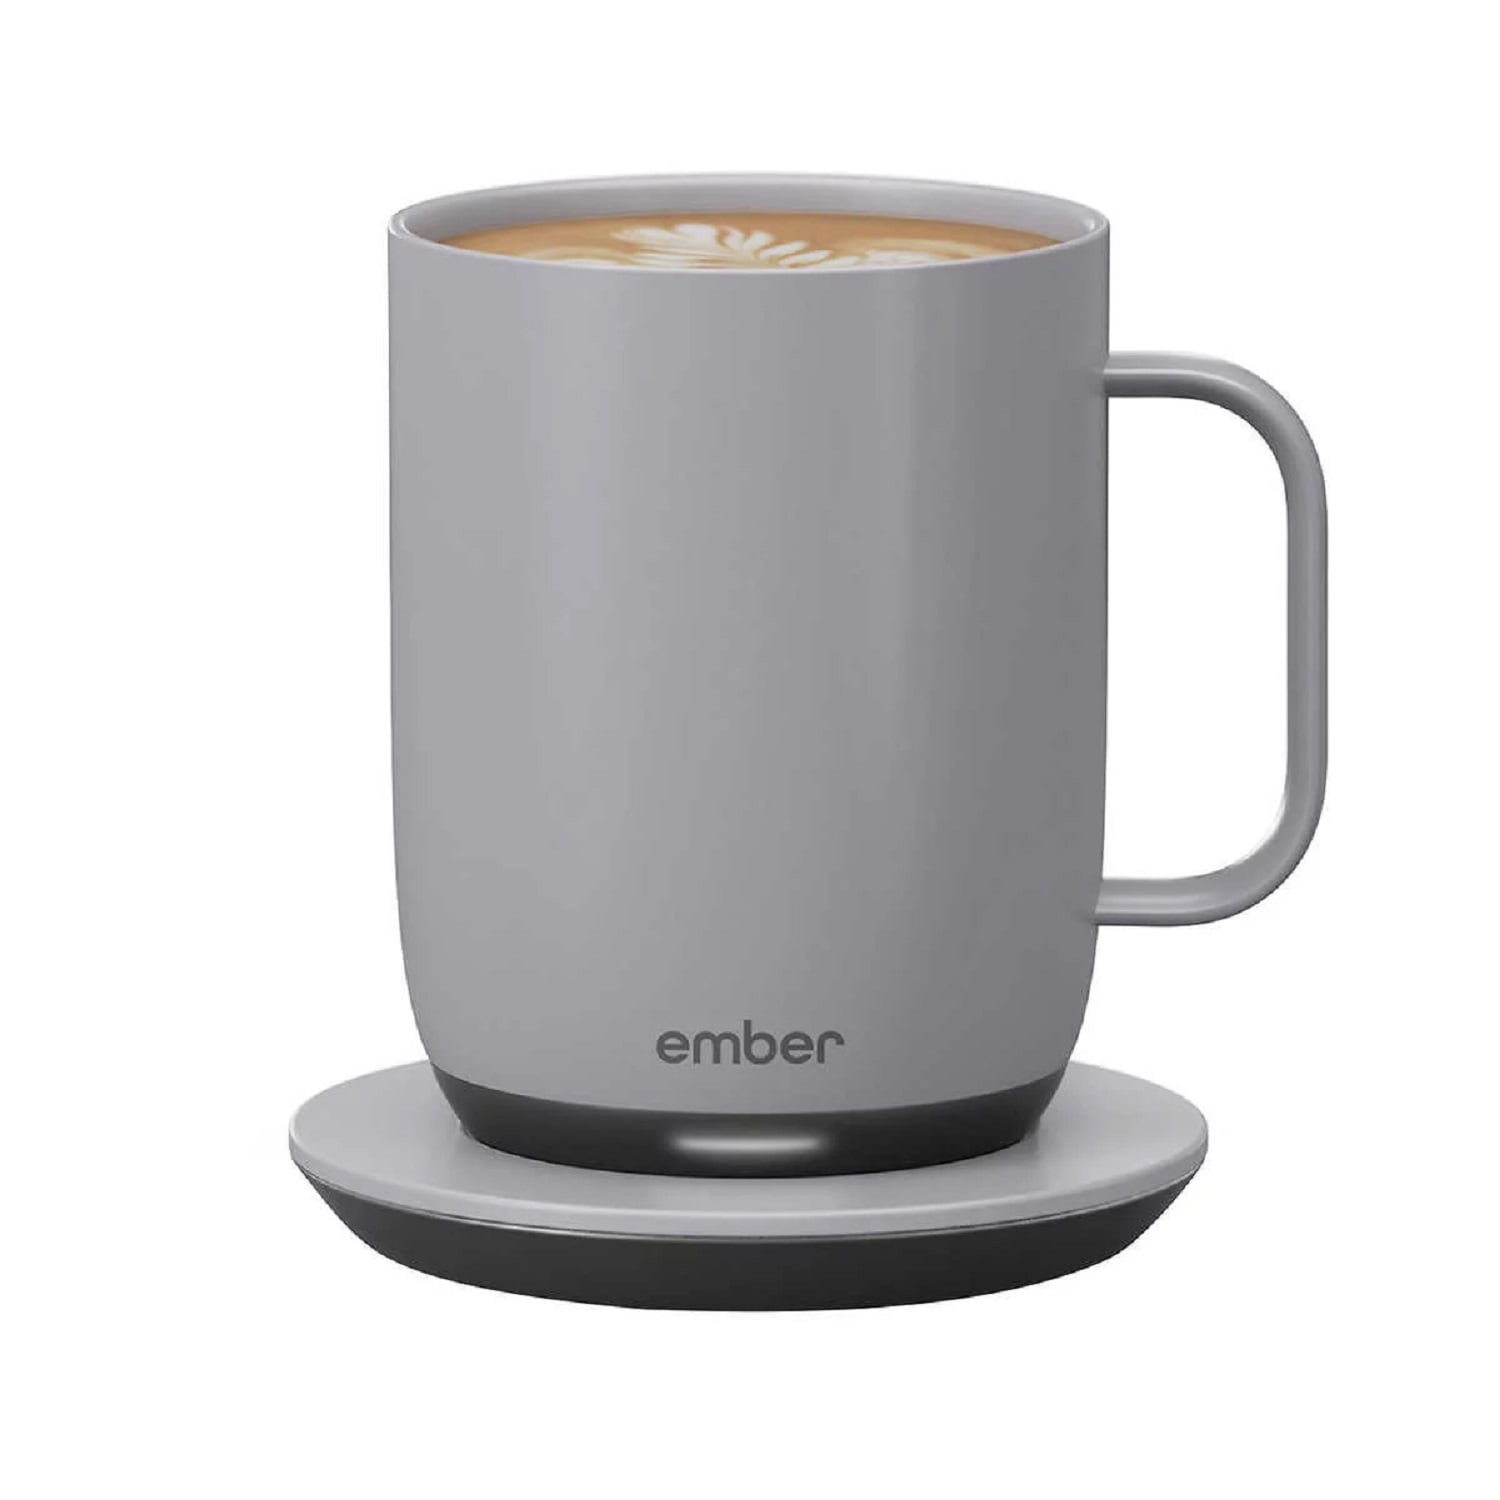 Ember Temperature Control Smart Mug 2, 14 oz, Gray, 80-min Battery Life -  App Controlled Heated Coffee Mug - Improved Design 